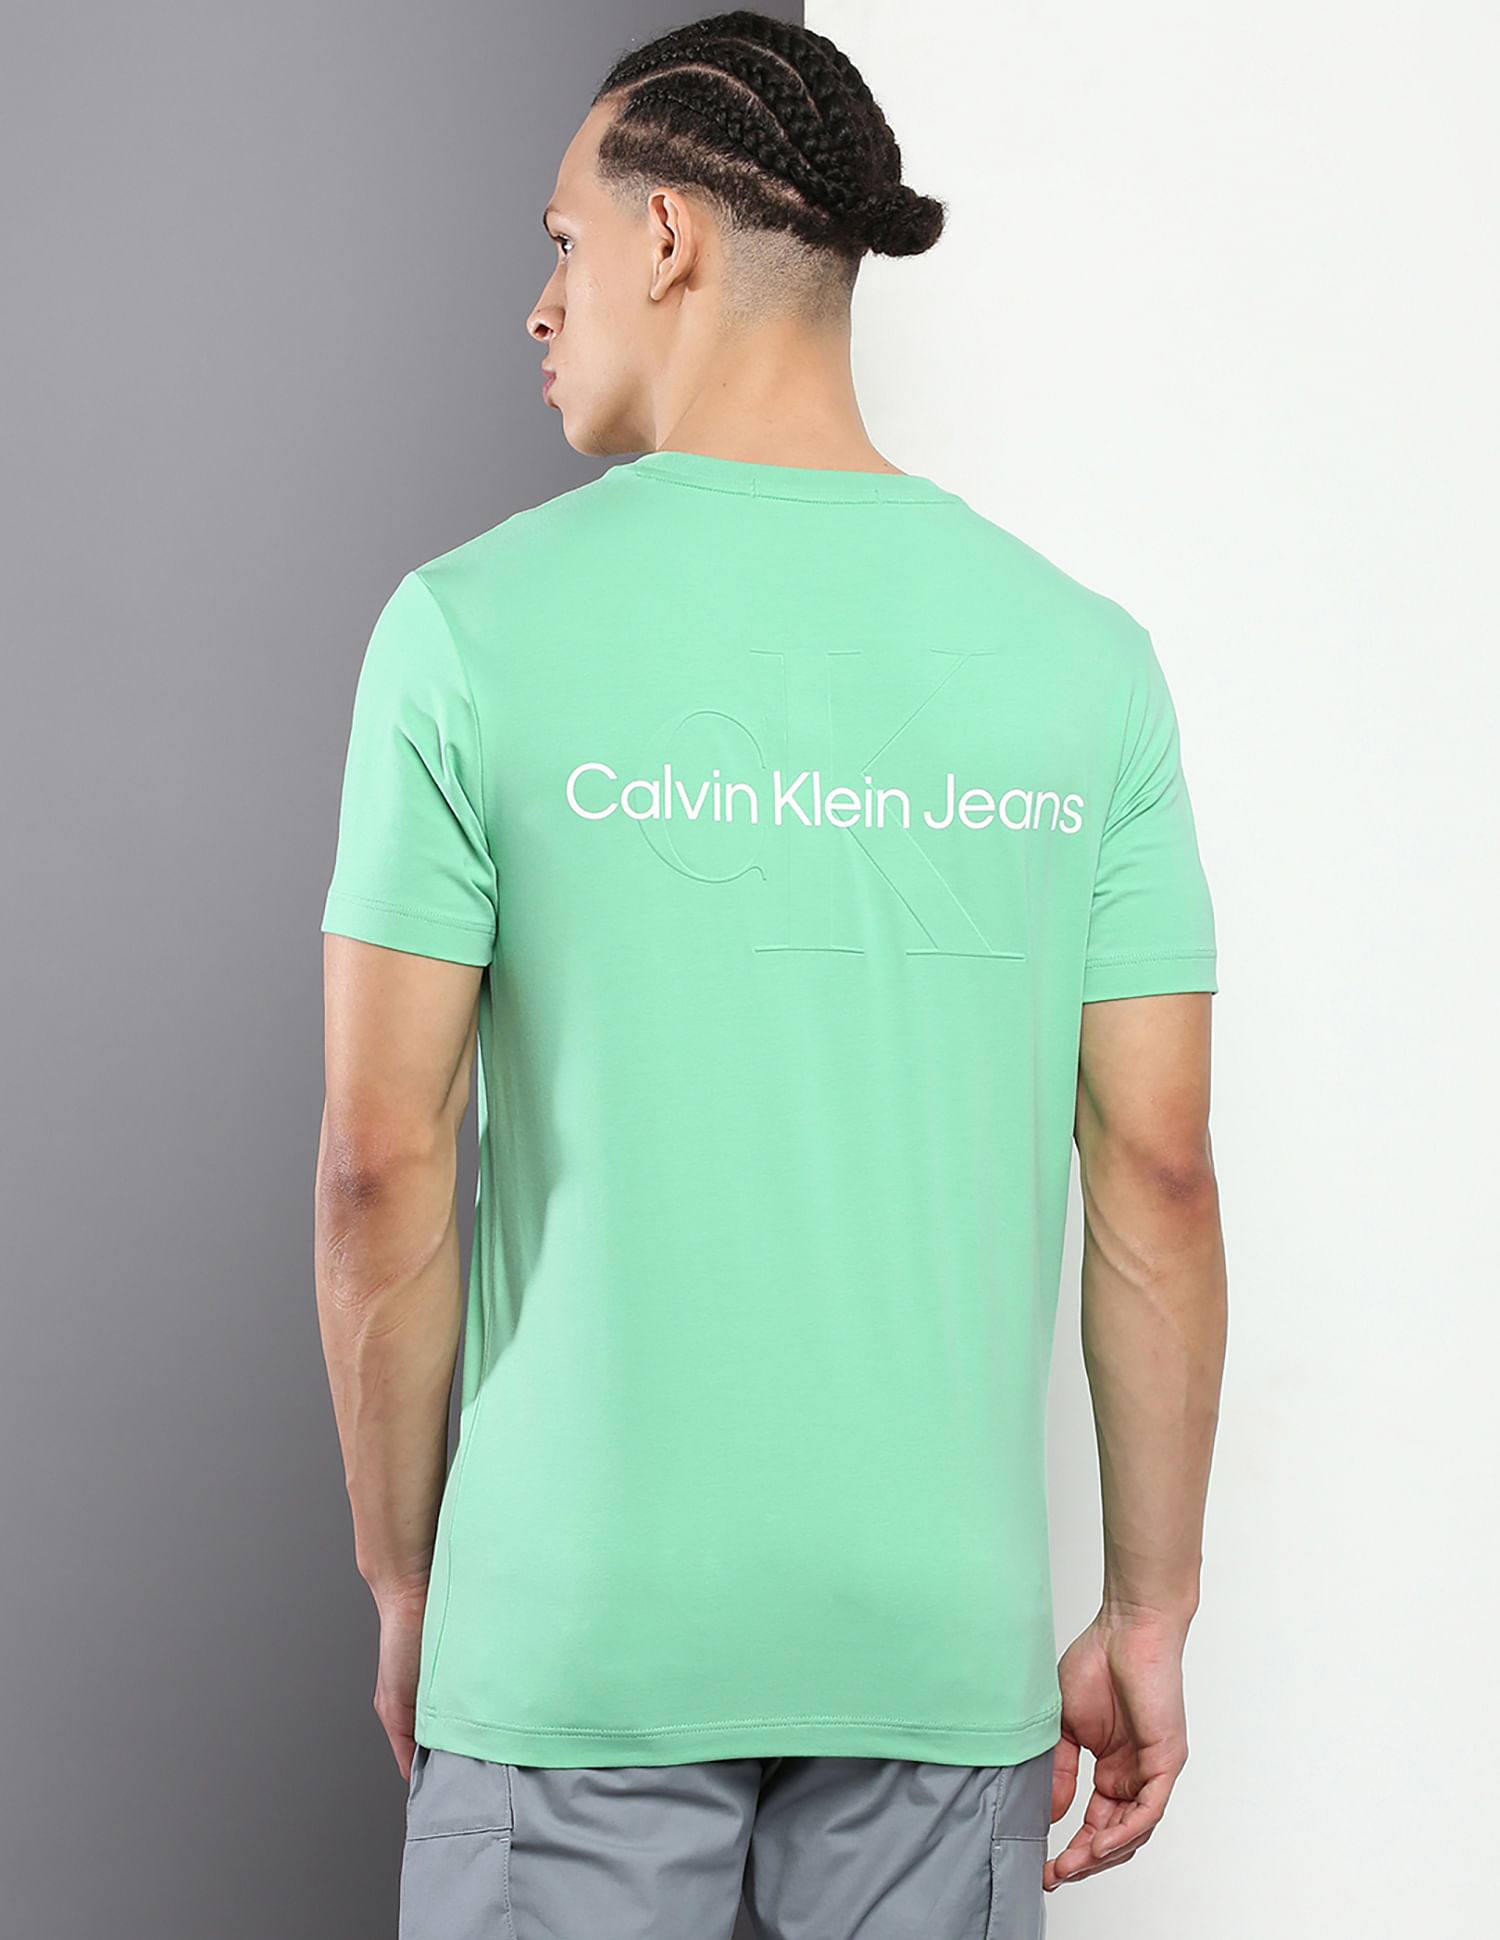 Buy Calvin Klein Jeans Brand T-Shirt Crew Print Neck